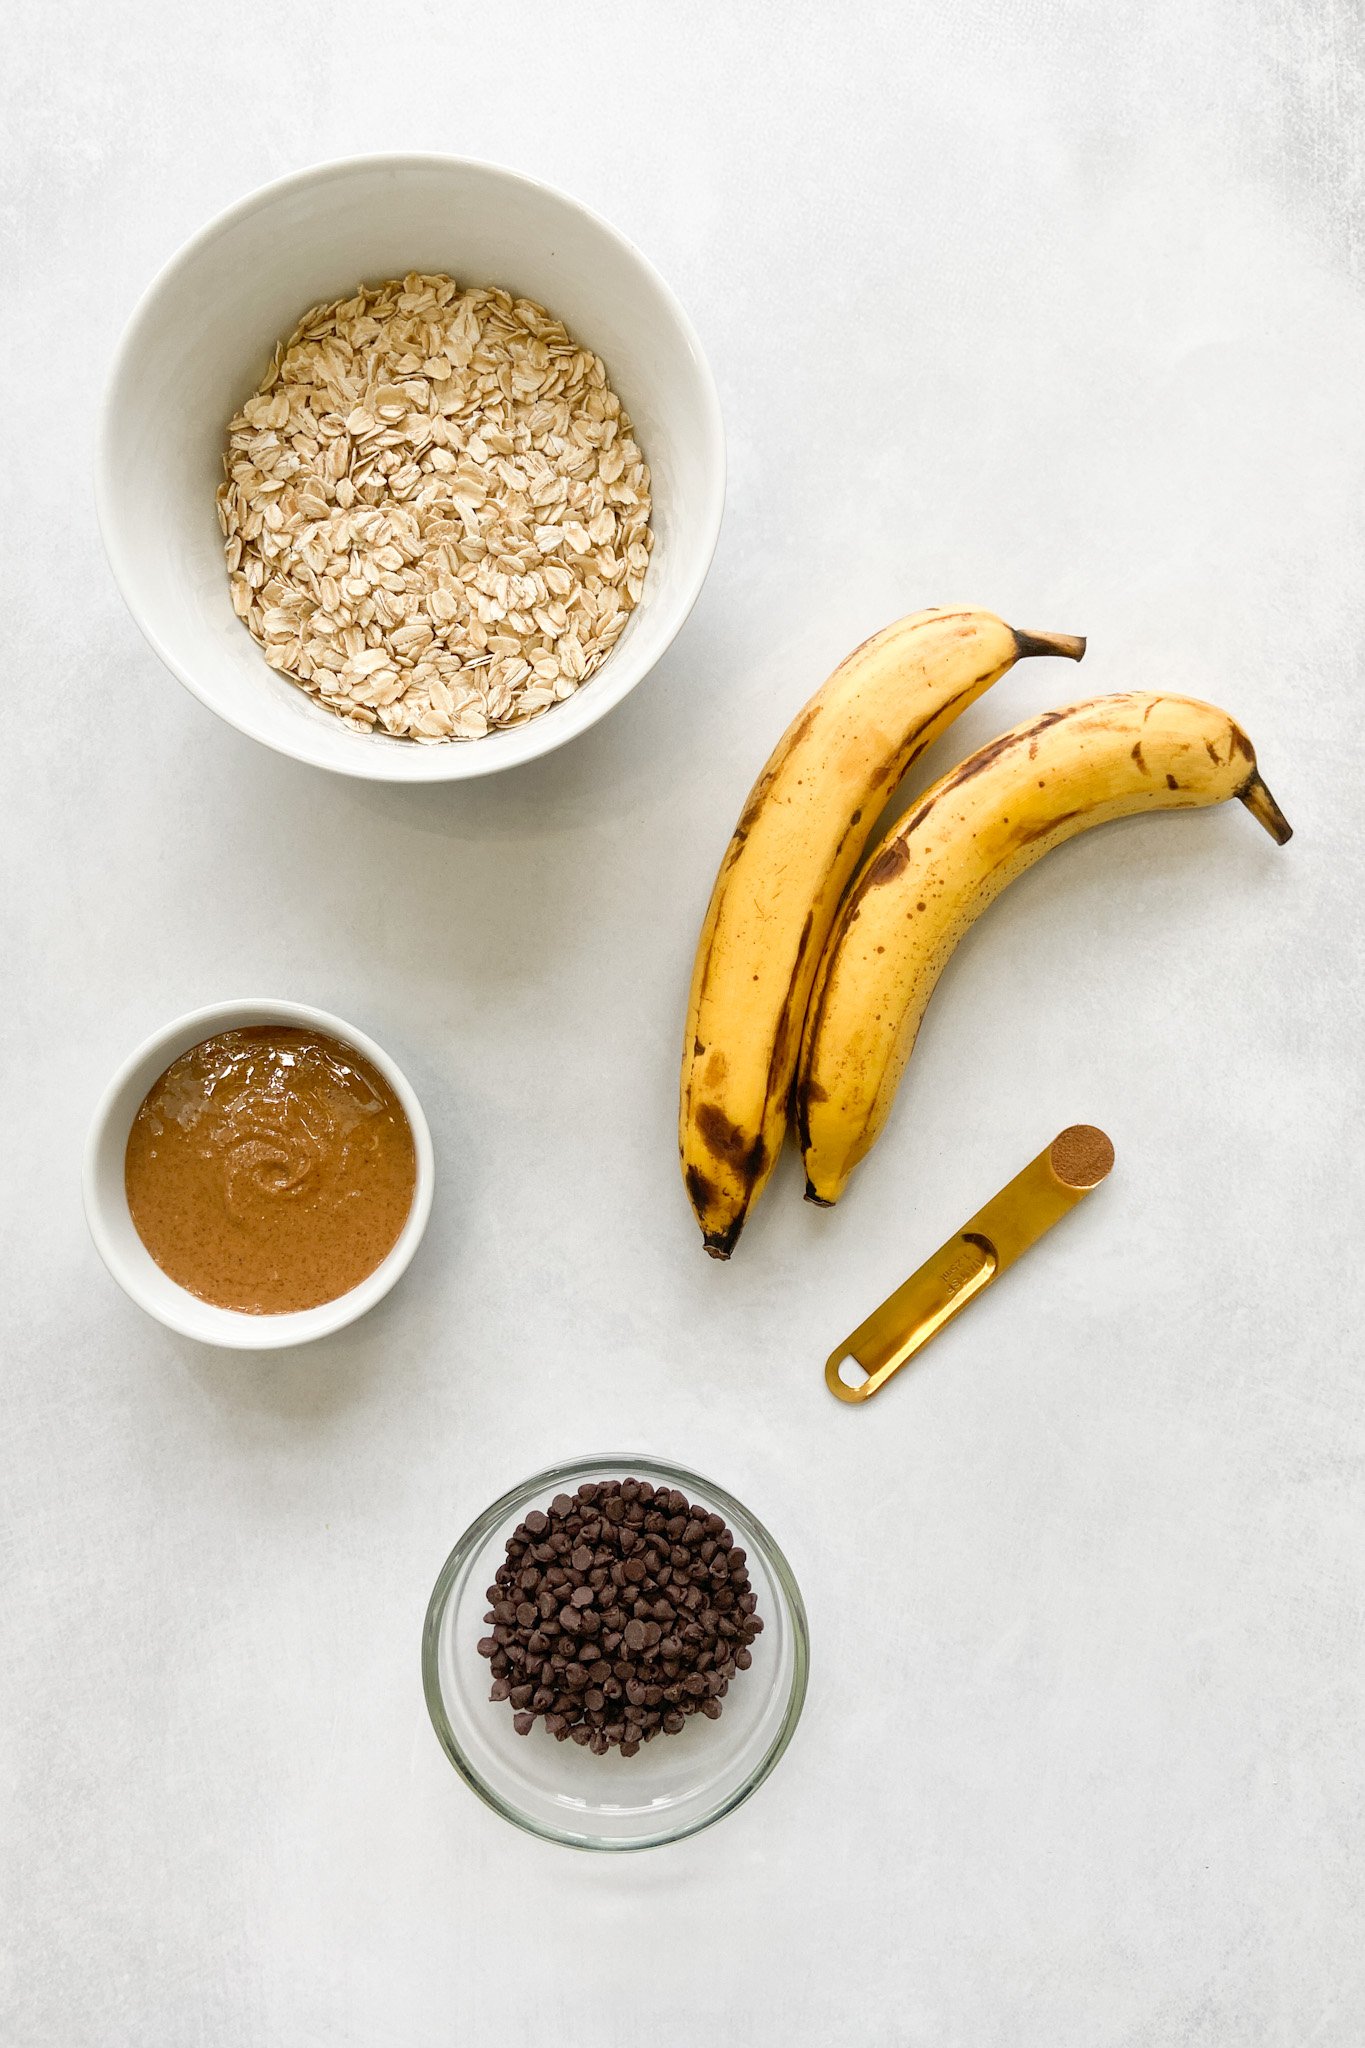 Ingredients to make peanut butter banana bars